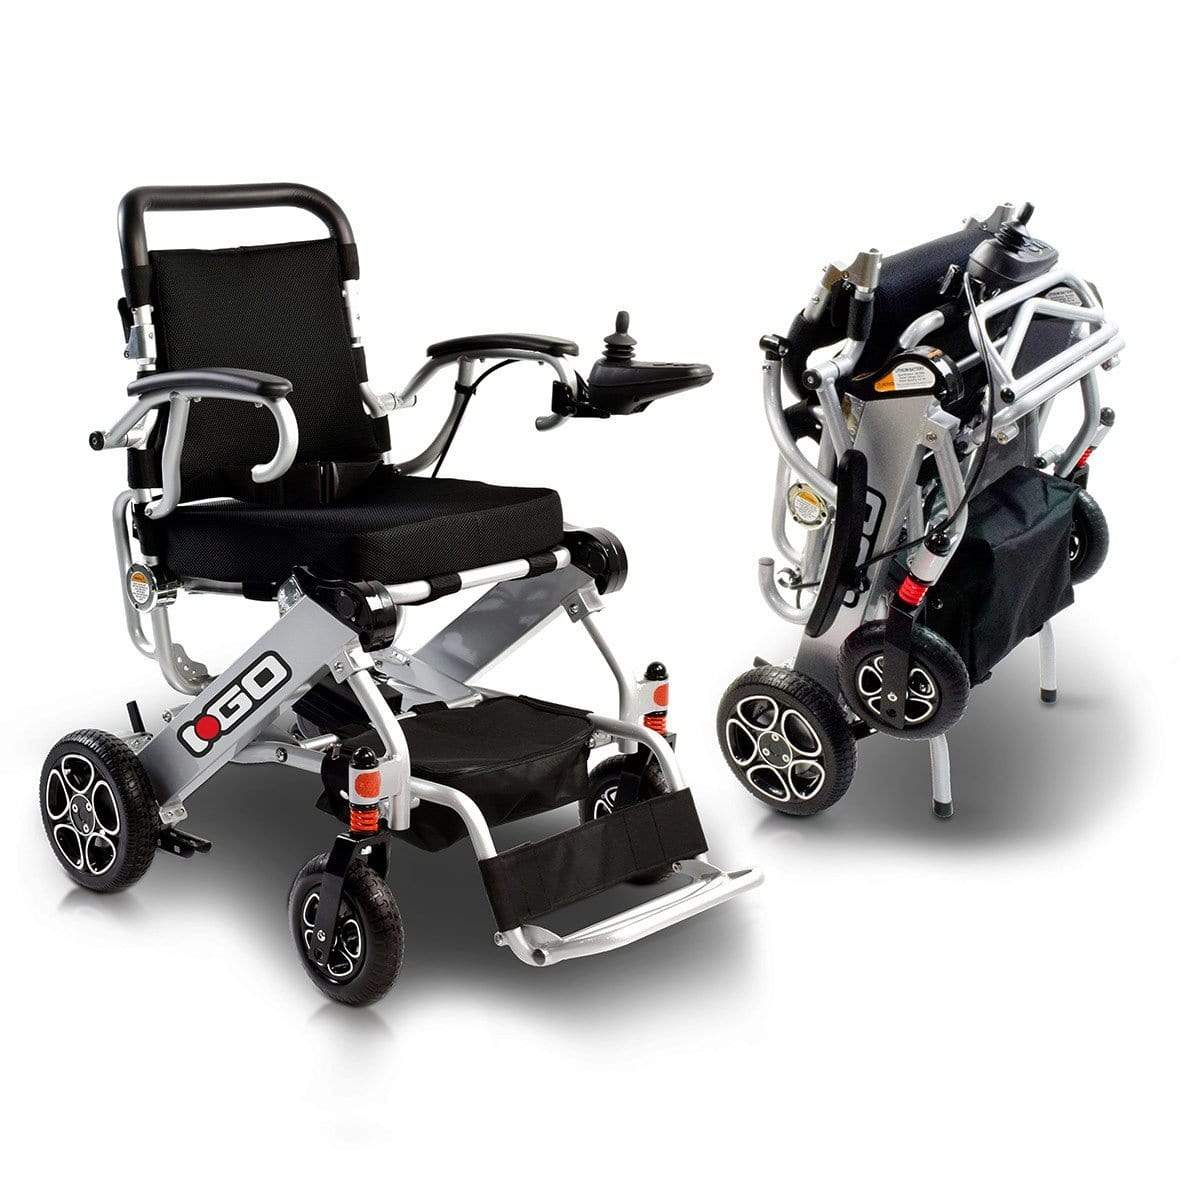 Rollstuhl Mobilis Elektrorollstuhl M40 iGO Mobilis 202146 guenstig online kaufen bei VIDIMA